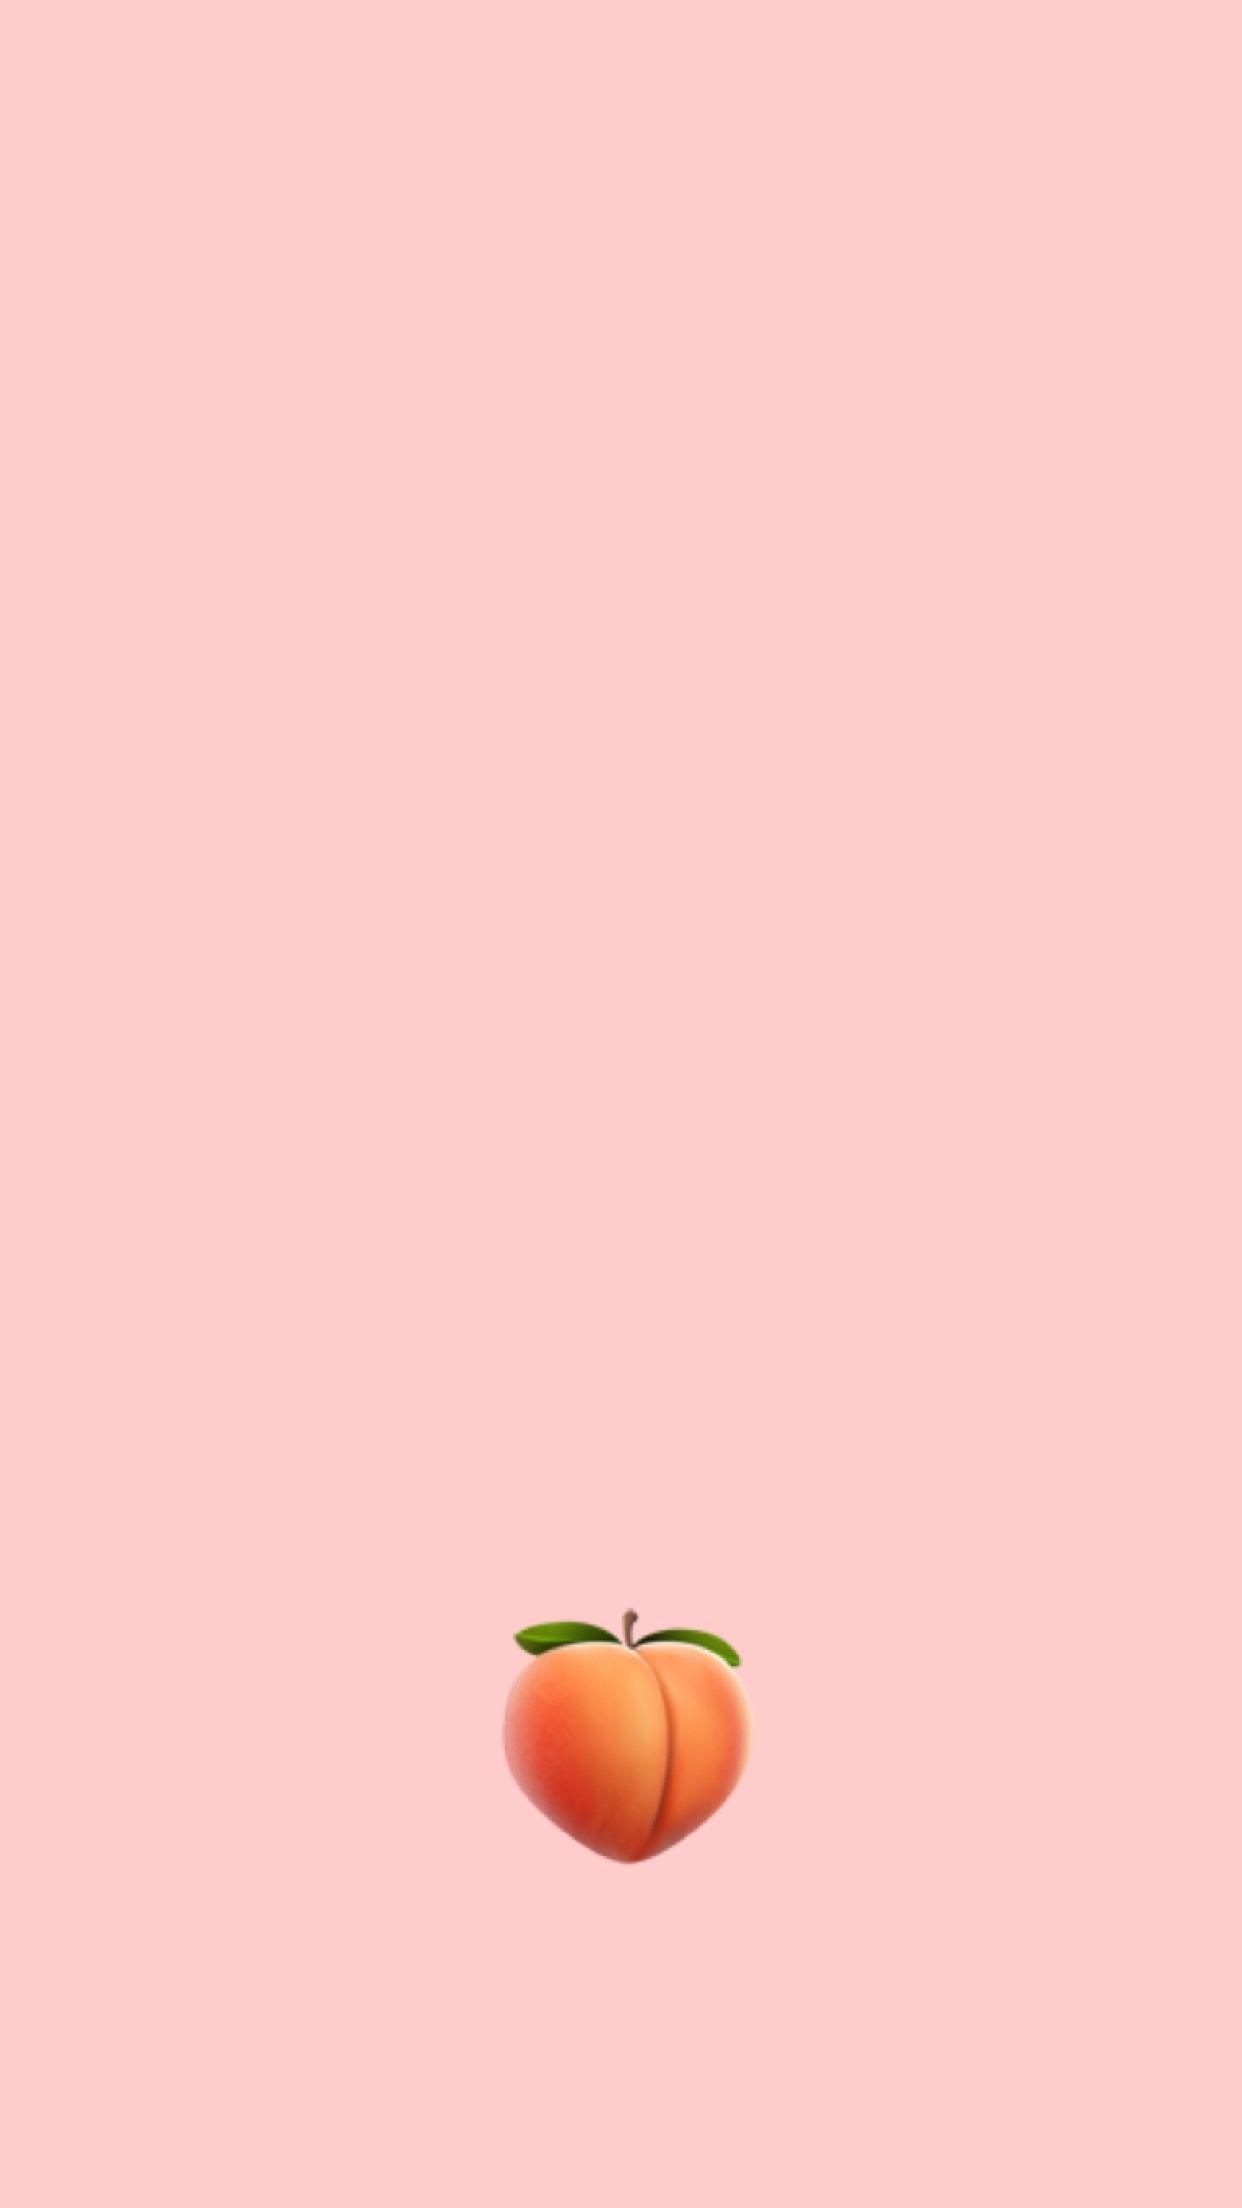 píntєrєѕt ─ cσѕmσѕlífє | Peach wallpaper, Peach aesthetic, Wallpaper